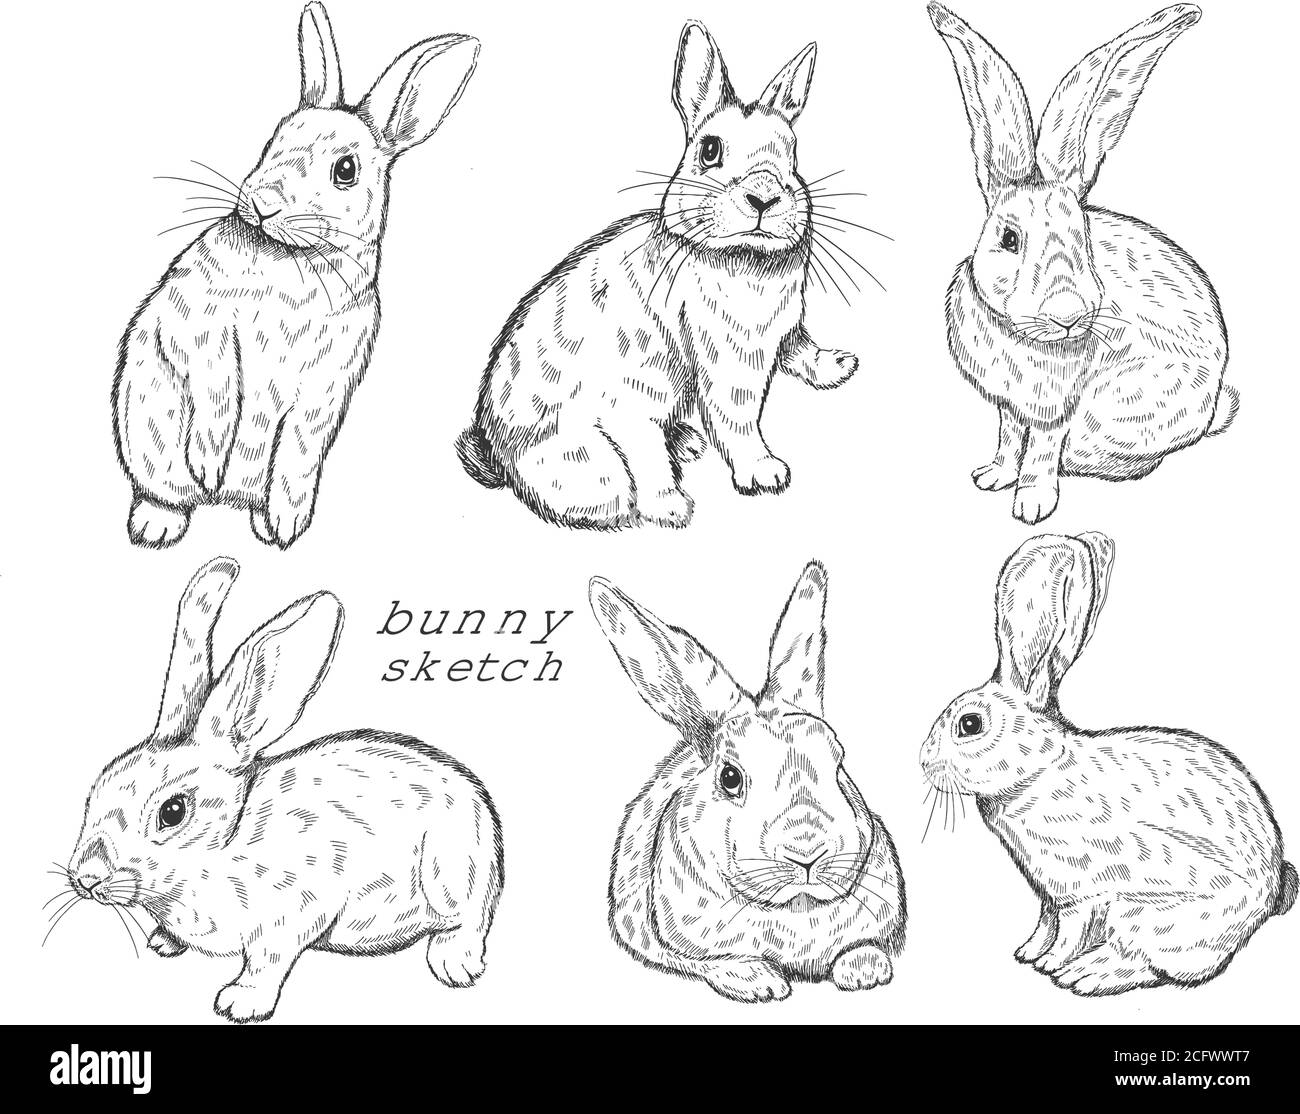 How ToBunny Rabbit Drawing Tutorial